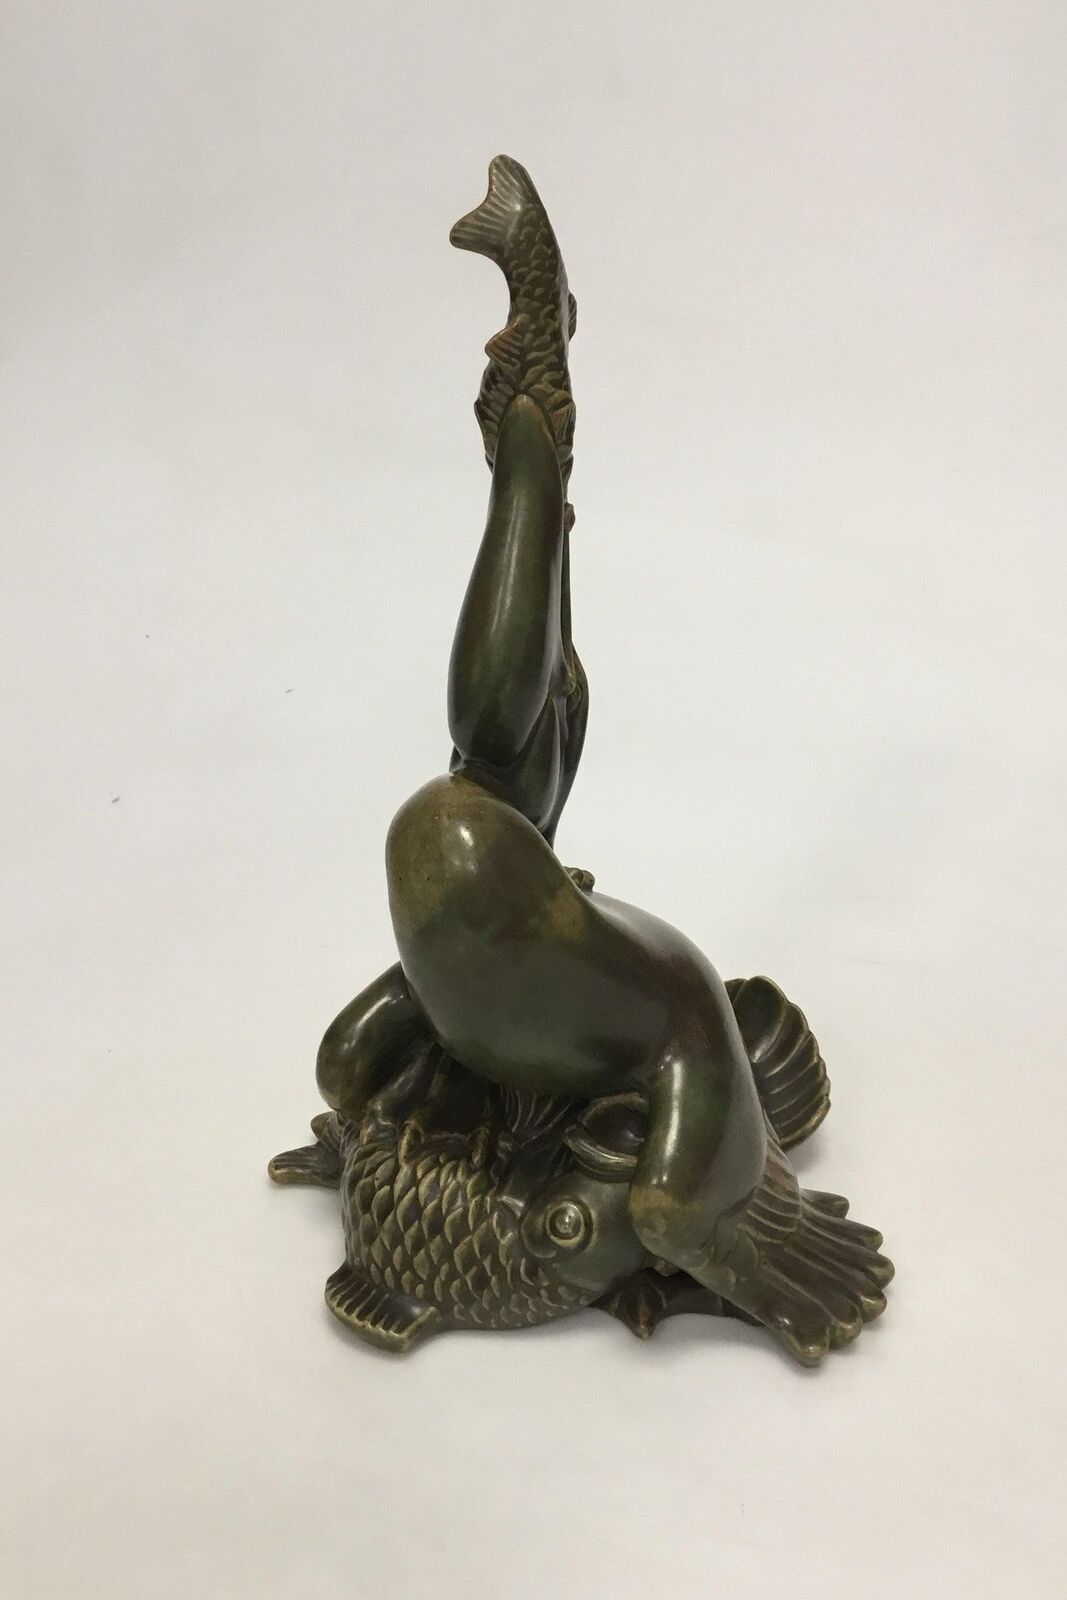 Unique Royal Copenhagen Hugo Liisberg figure of Pelican with fish from the